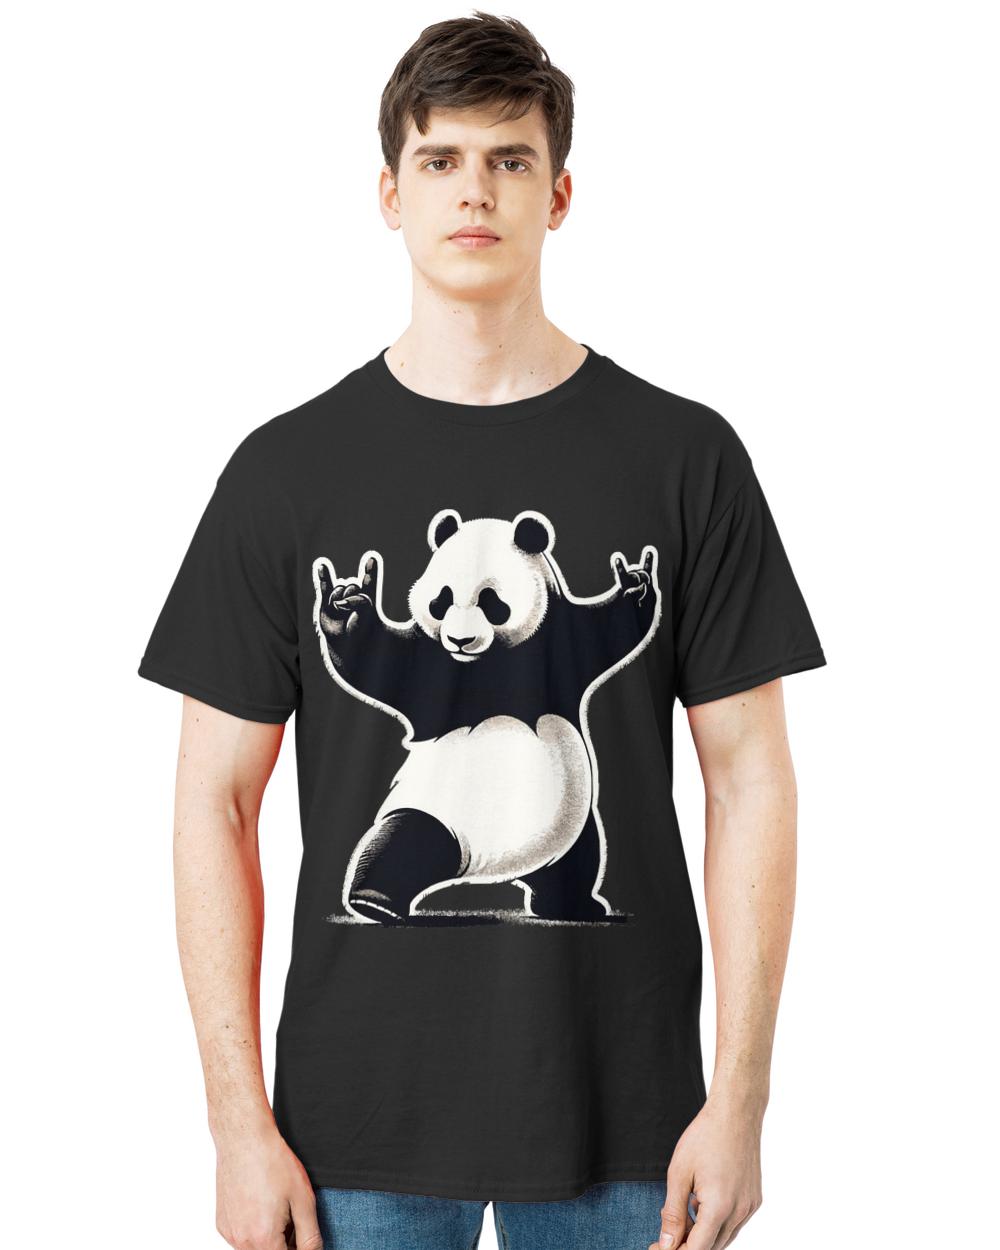 Panda T-ShirtRetro Panda Rock Music Gift Funny Panda T-Shirt_by KsuAnn_ (4)